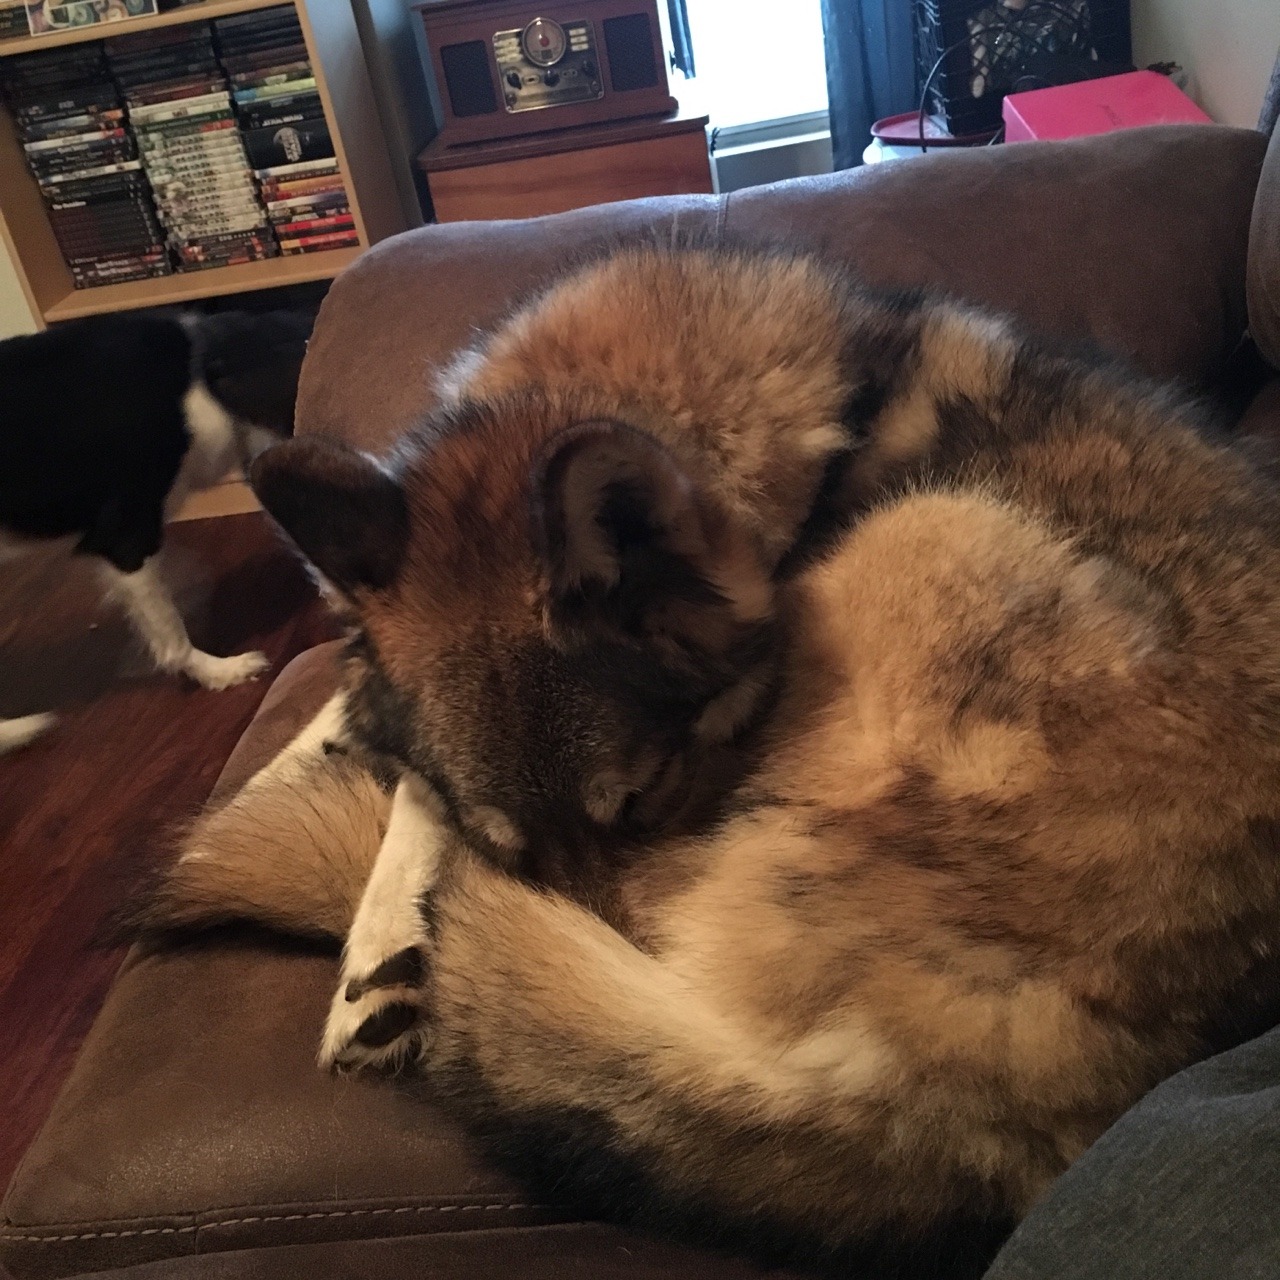 darkwonderlandfantasy:
“Gambit likes couch time.
”